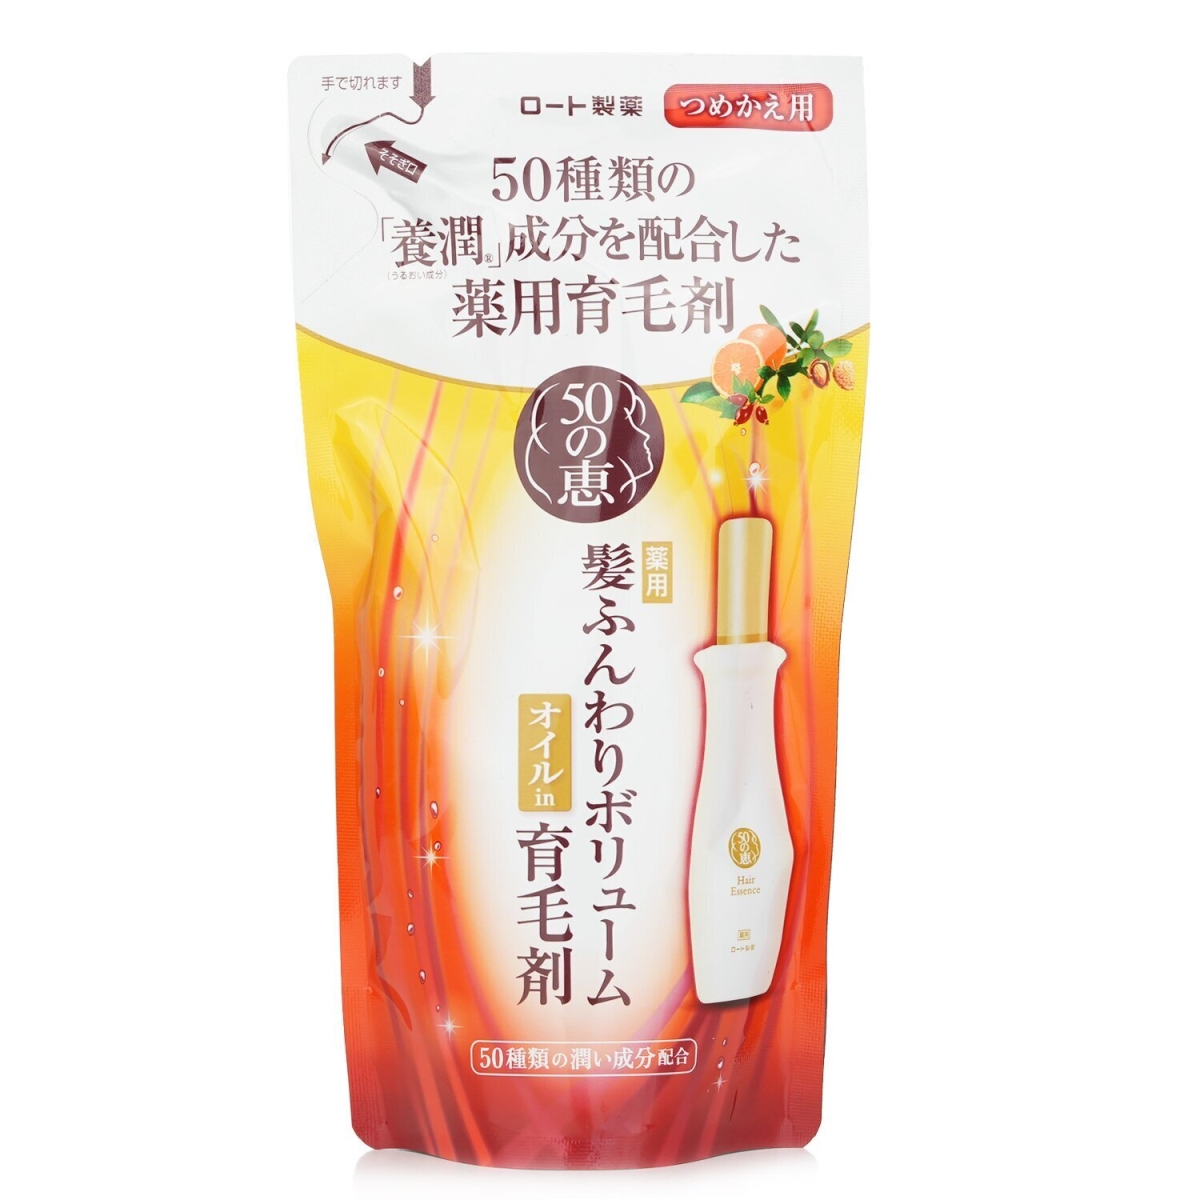 Picture of 50 Megumi 298600 150 ml Hair Revitalising Essence Refill